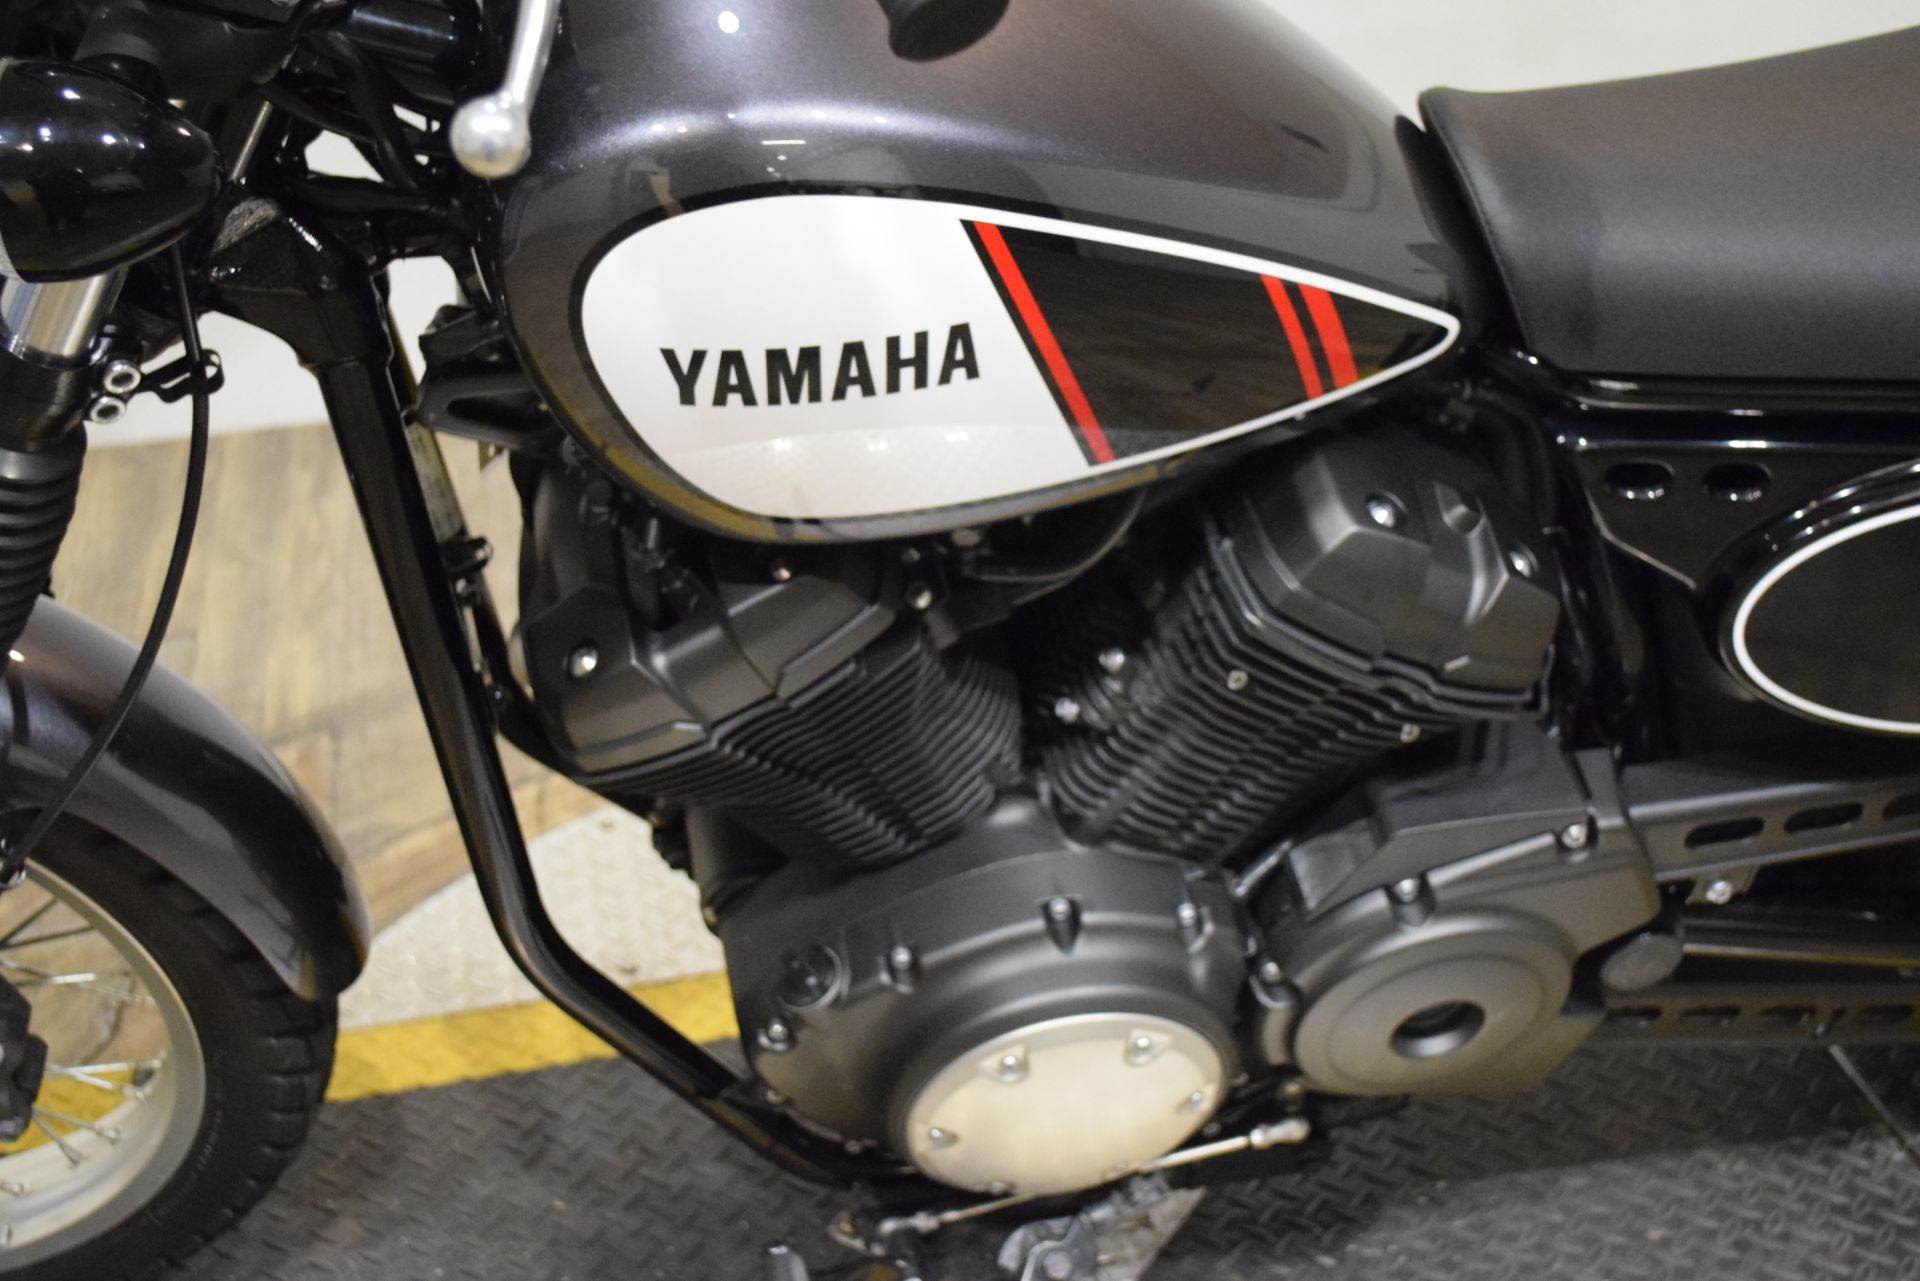 2017 Yamaha SCR950 in Wauconda, Illinois - Photo 18